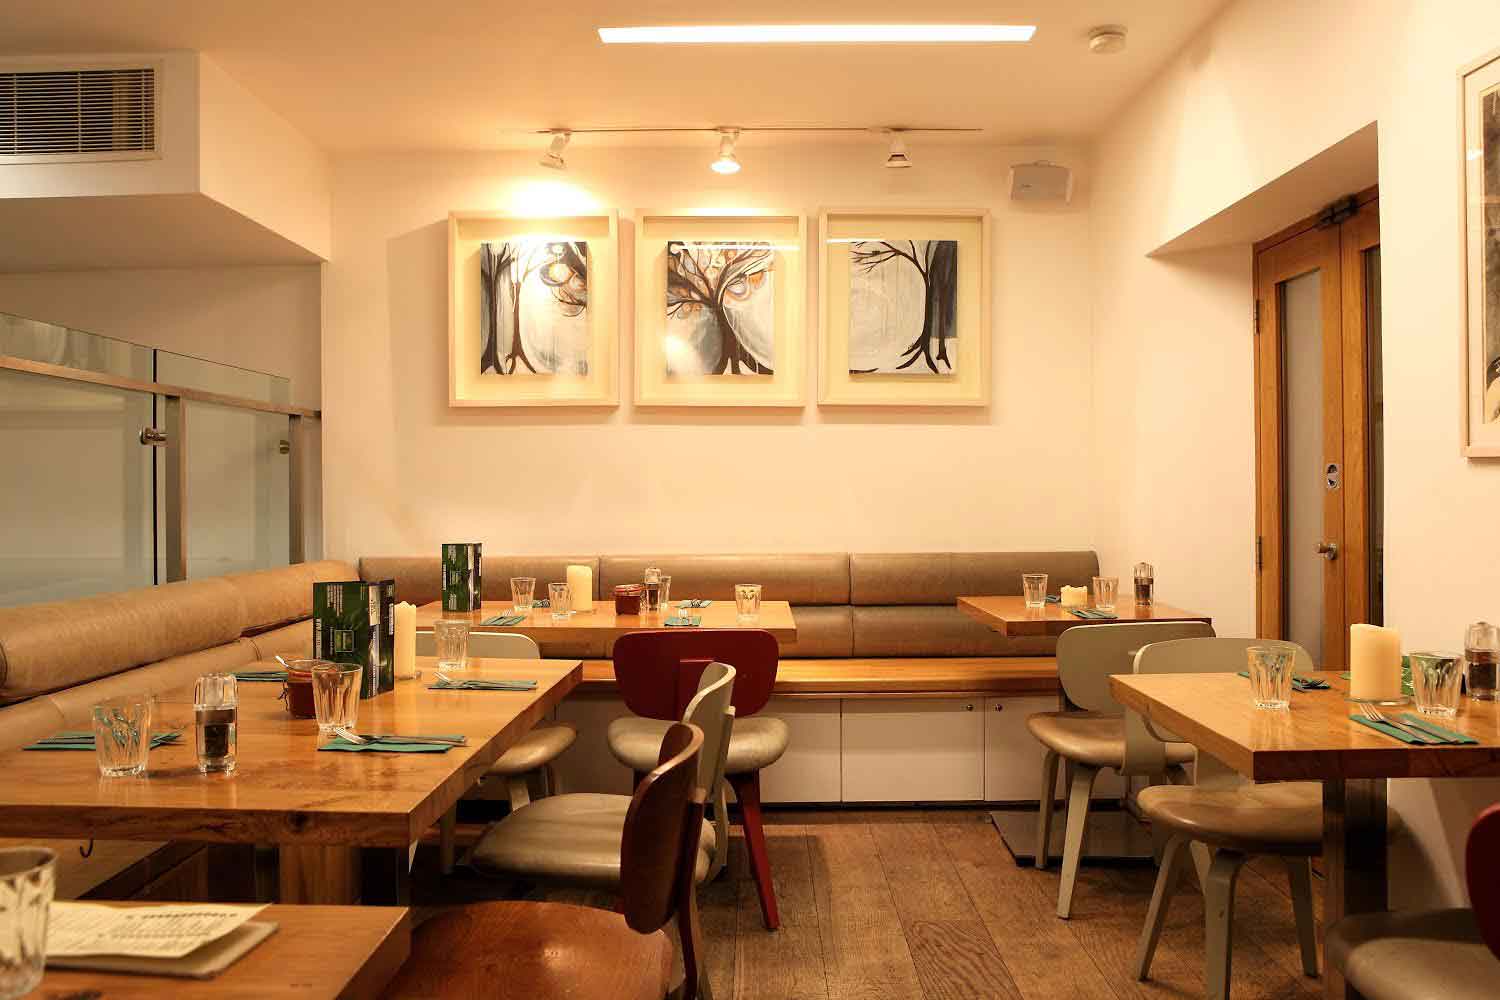 Dinning room at Green 19 restaurant designed by Dublin Design Studio